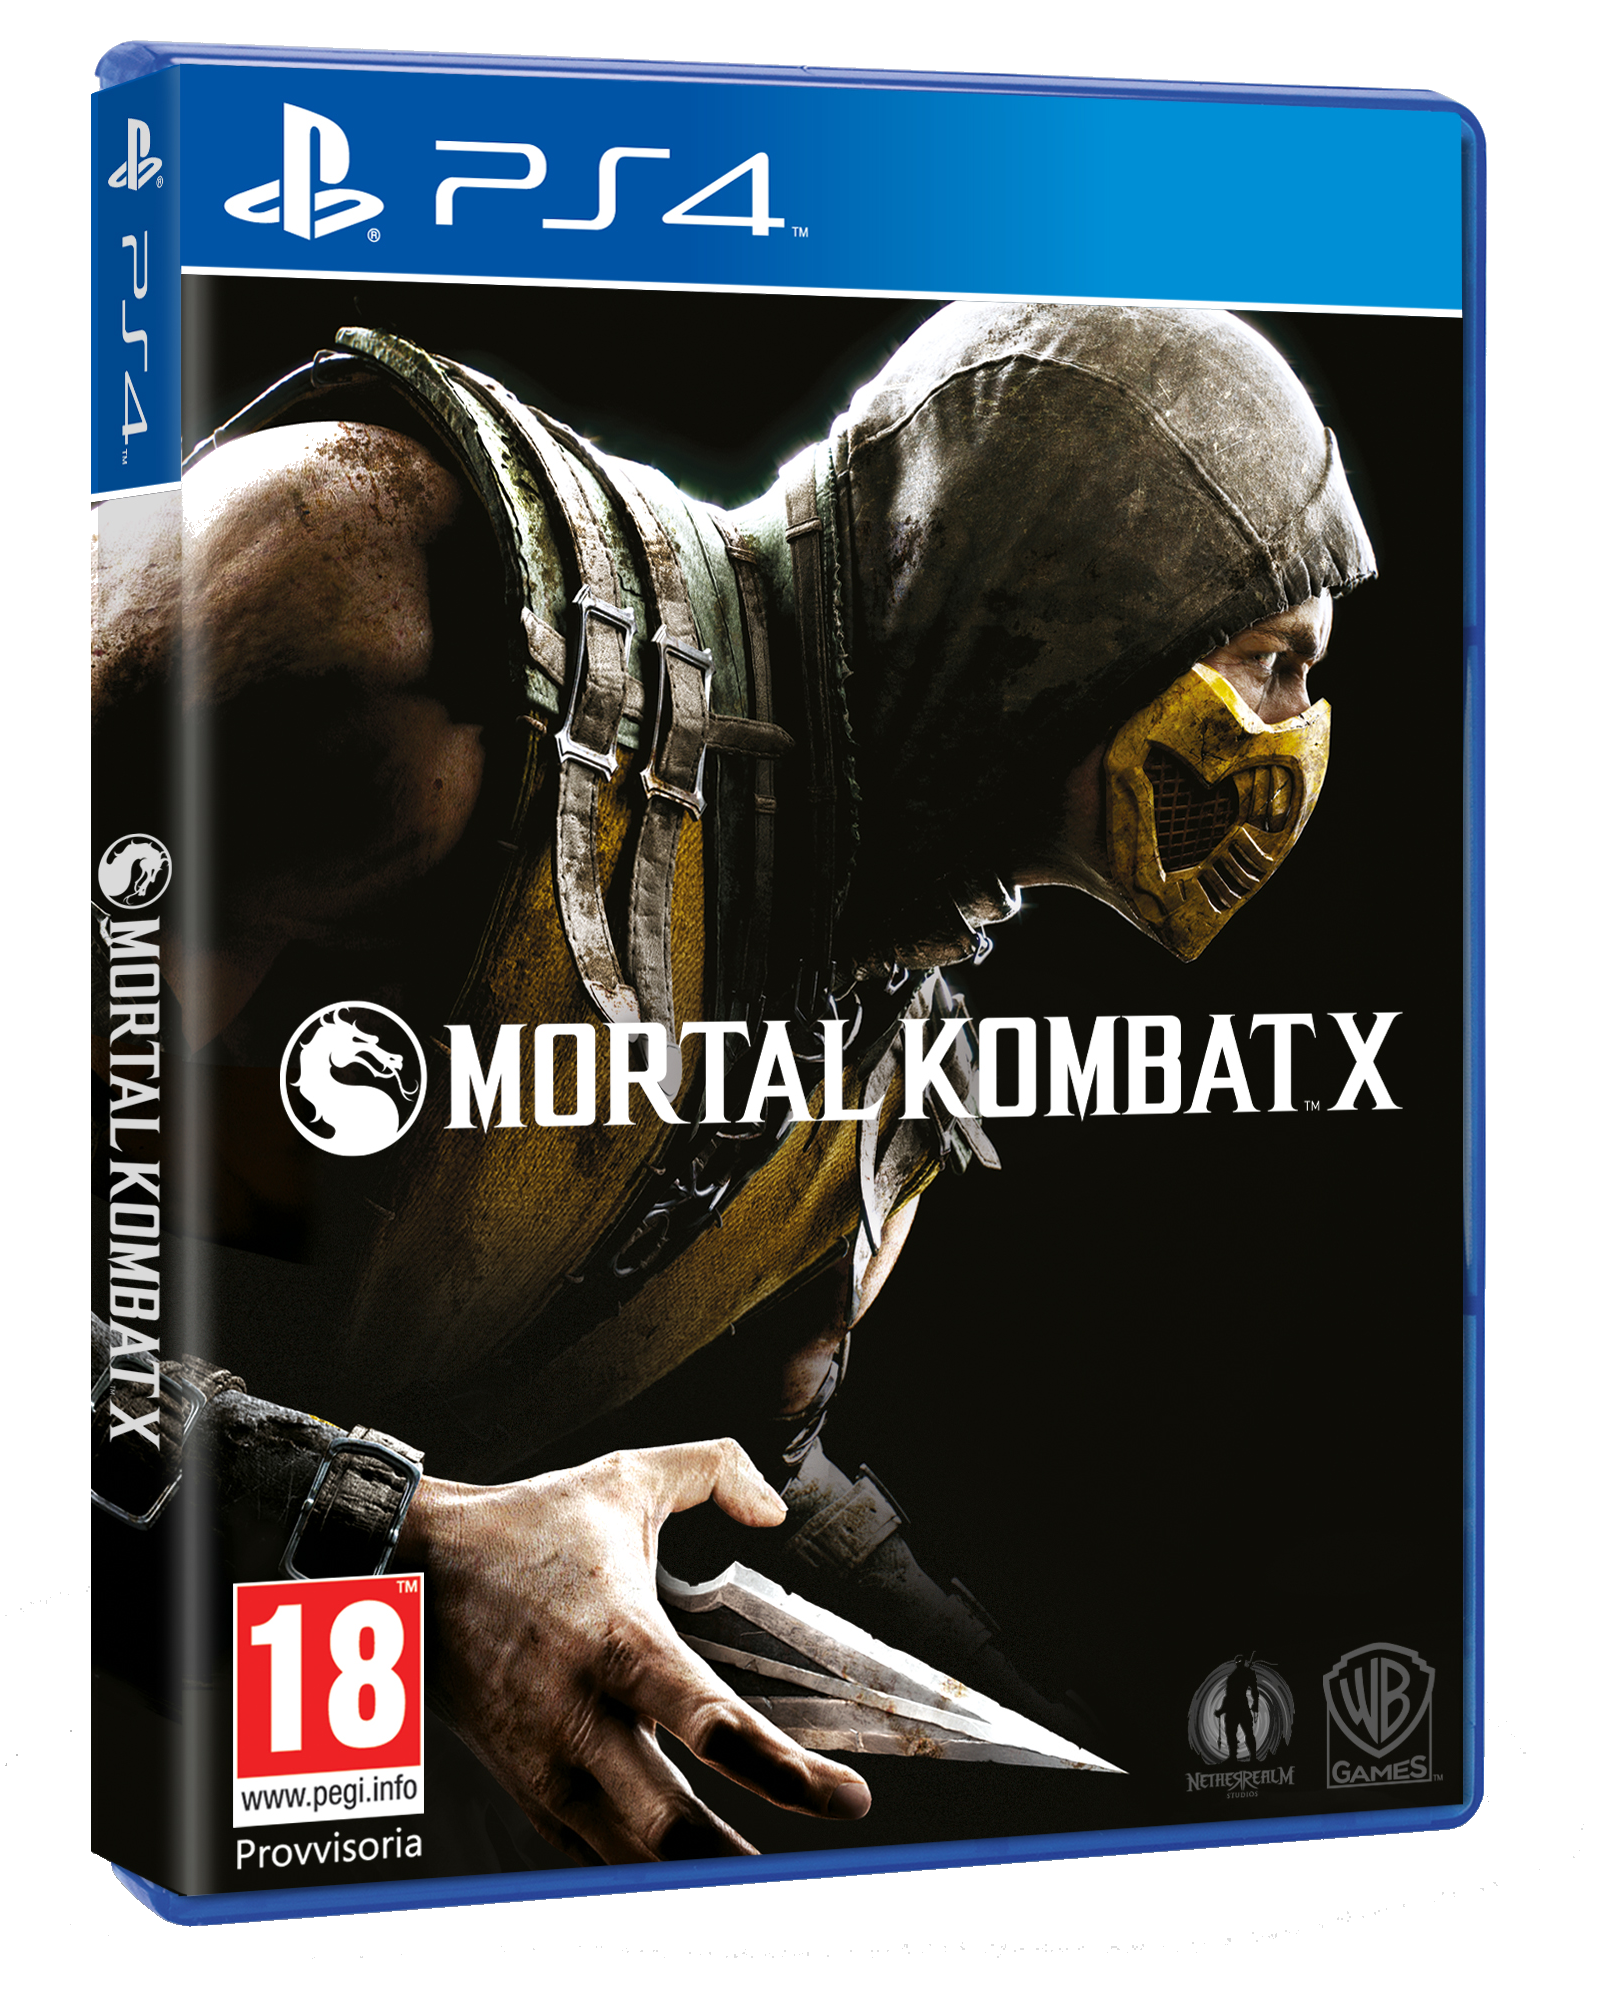 Диск на ПС 4 мортал комбат. Диск мортал комбат на плейстейшен 4. Mortal Kombat ps4 диск. Mortal Kombat на плейстейшн 4.